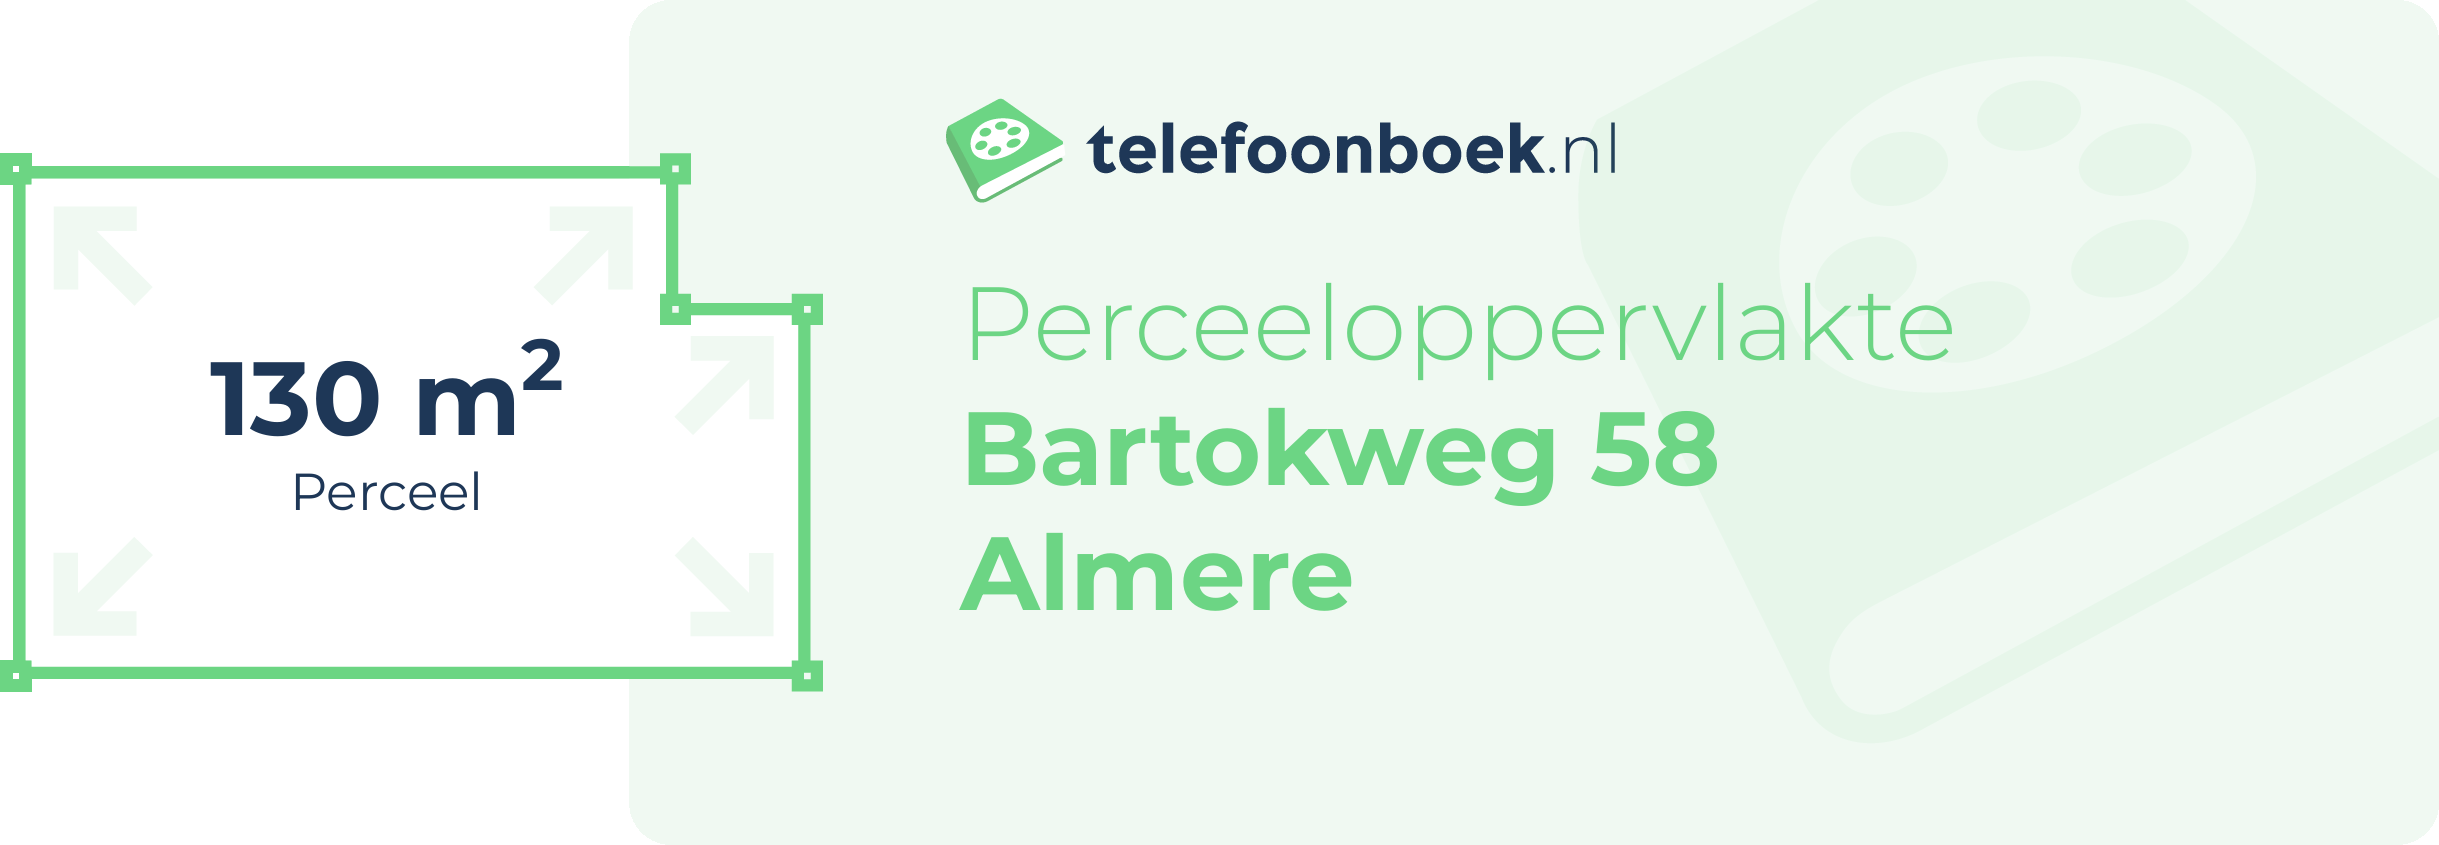 Perceeloppervlakte Bartokweg 58 Almere